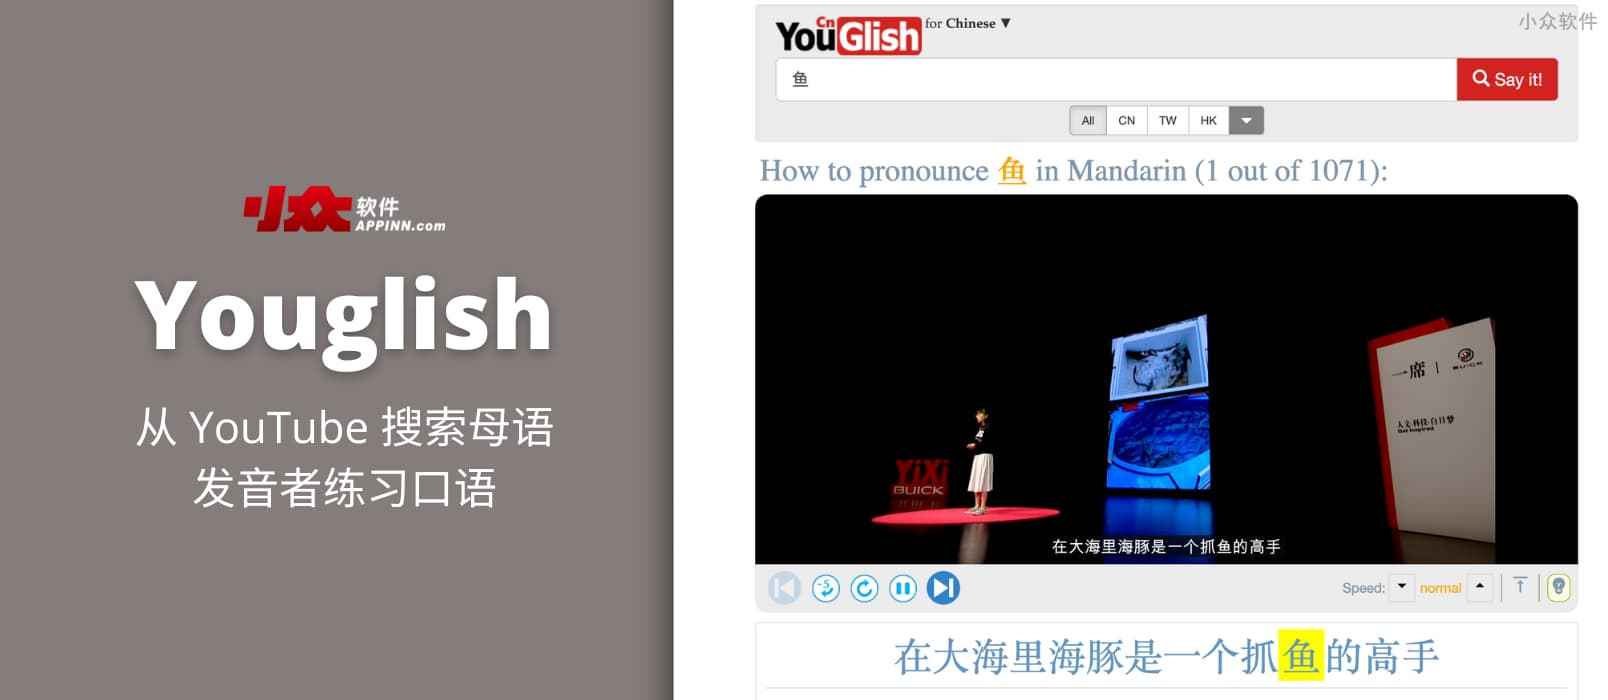 Youglish - 从 YouTube 搜索母语发音者，练习口语，支持英文、中文、手语在内的 18 种语言